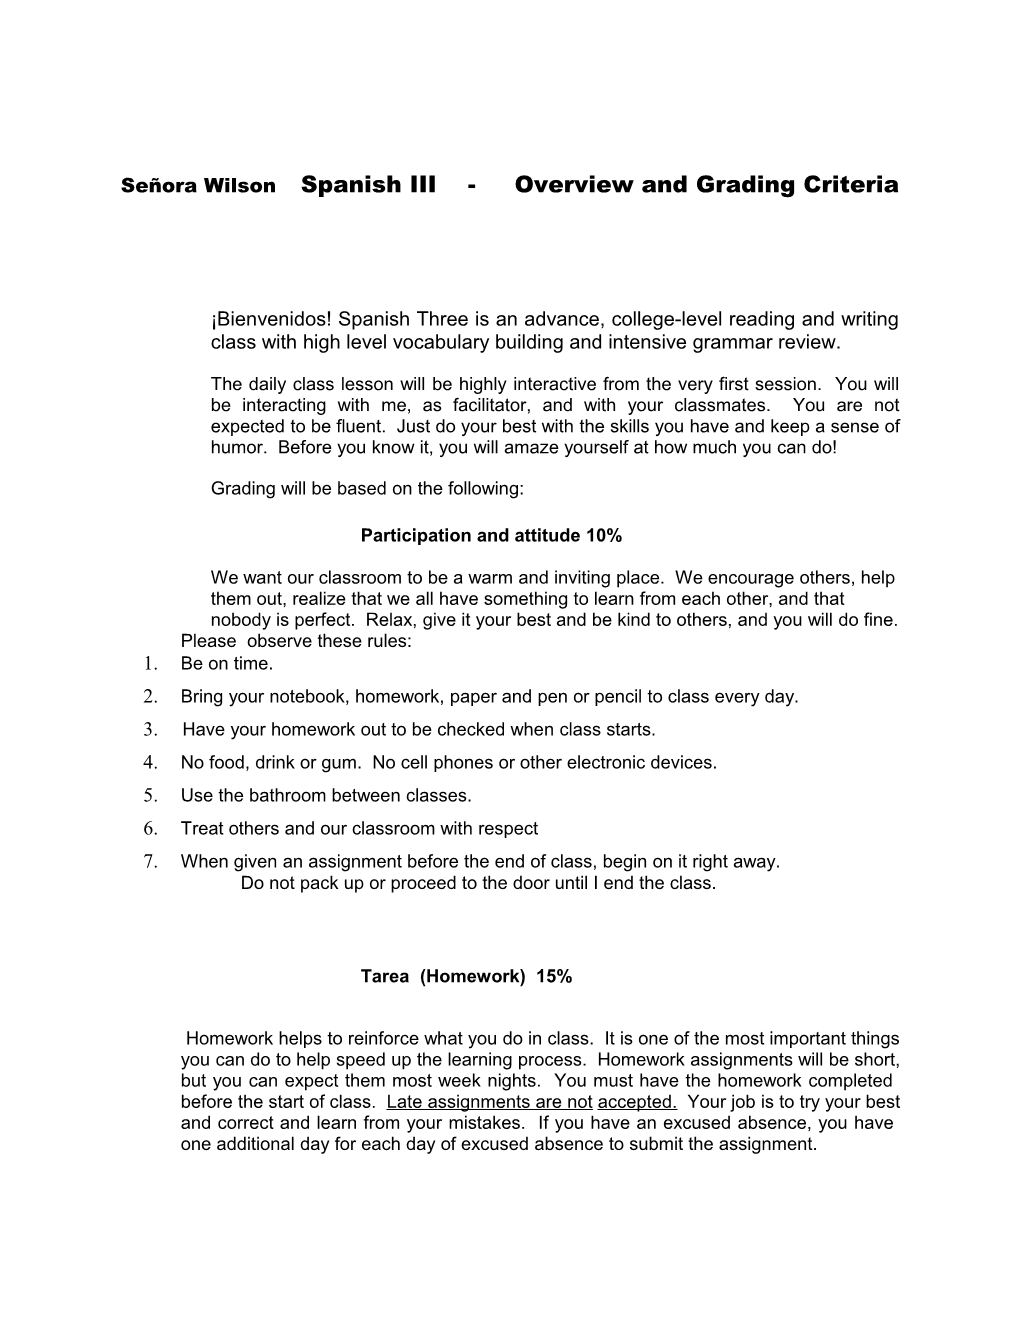 Señora Wilson Spanish III - Overview and Grading Criteria